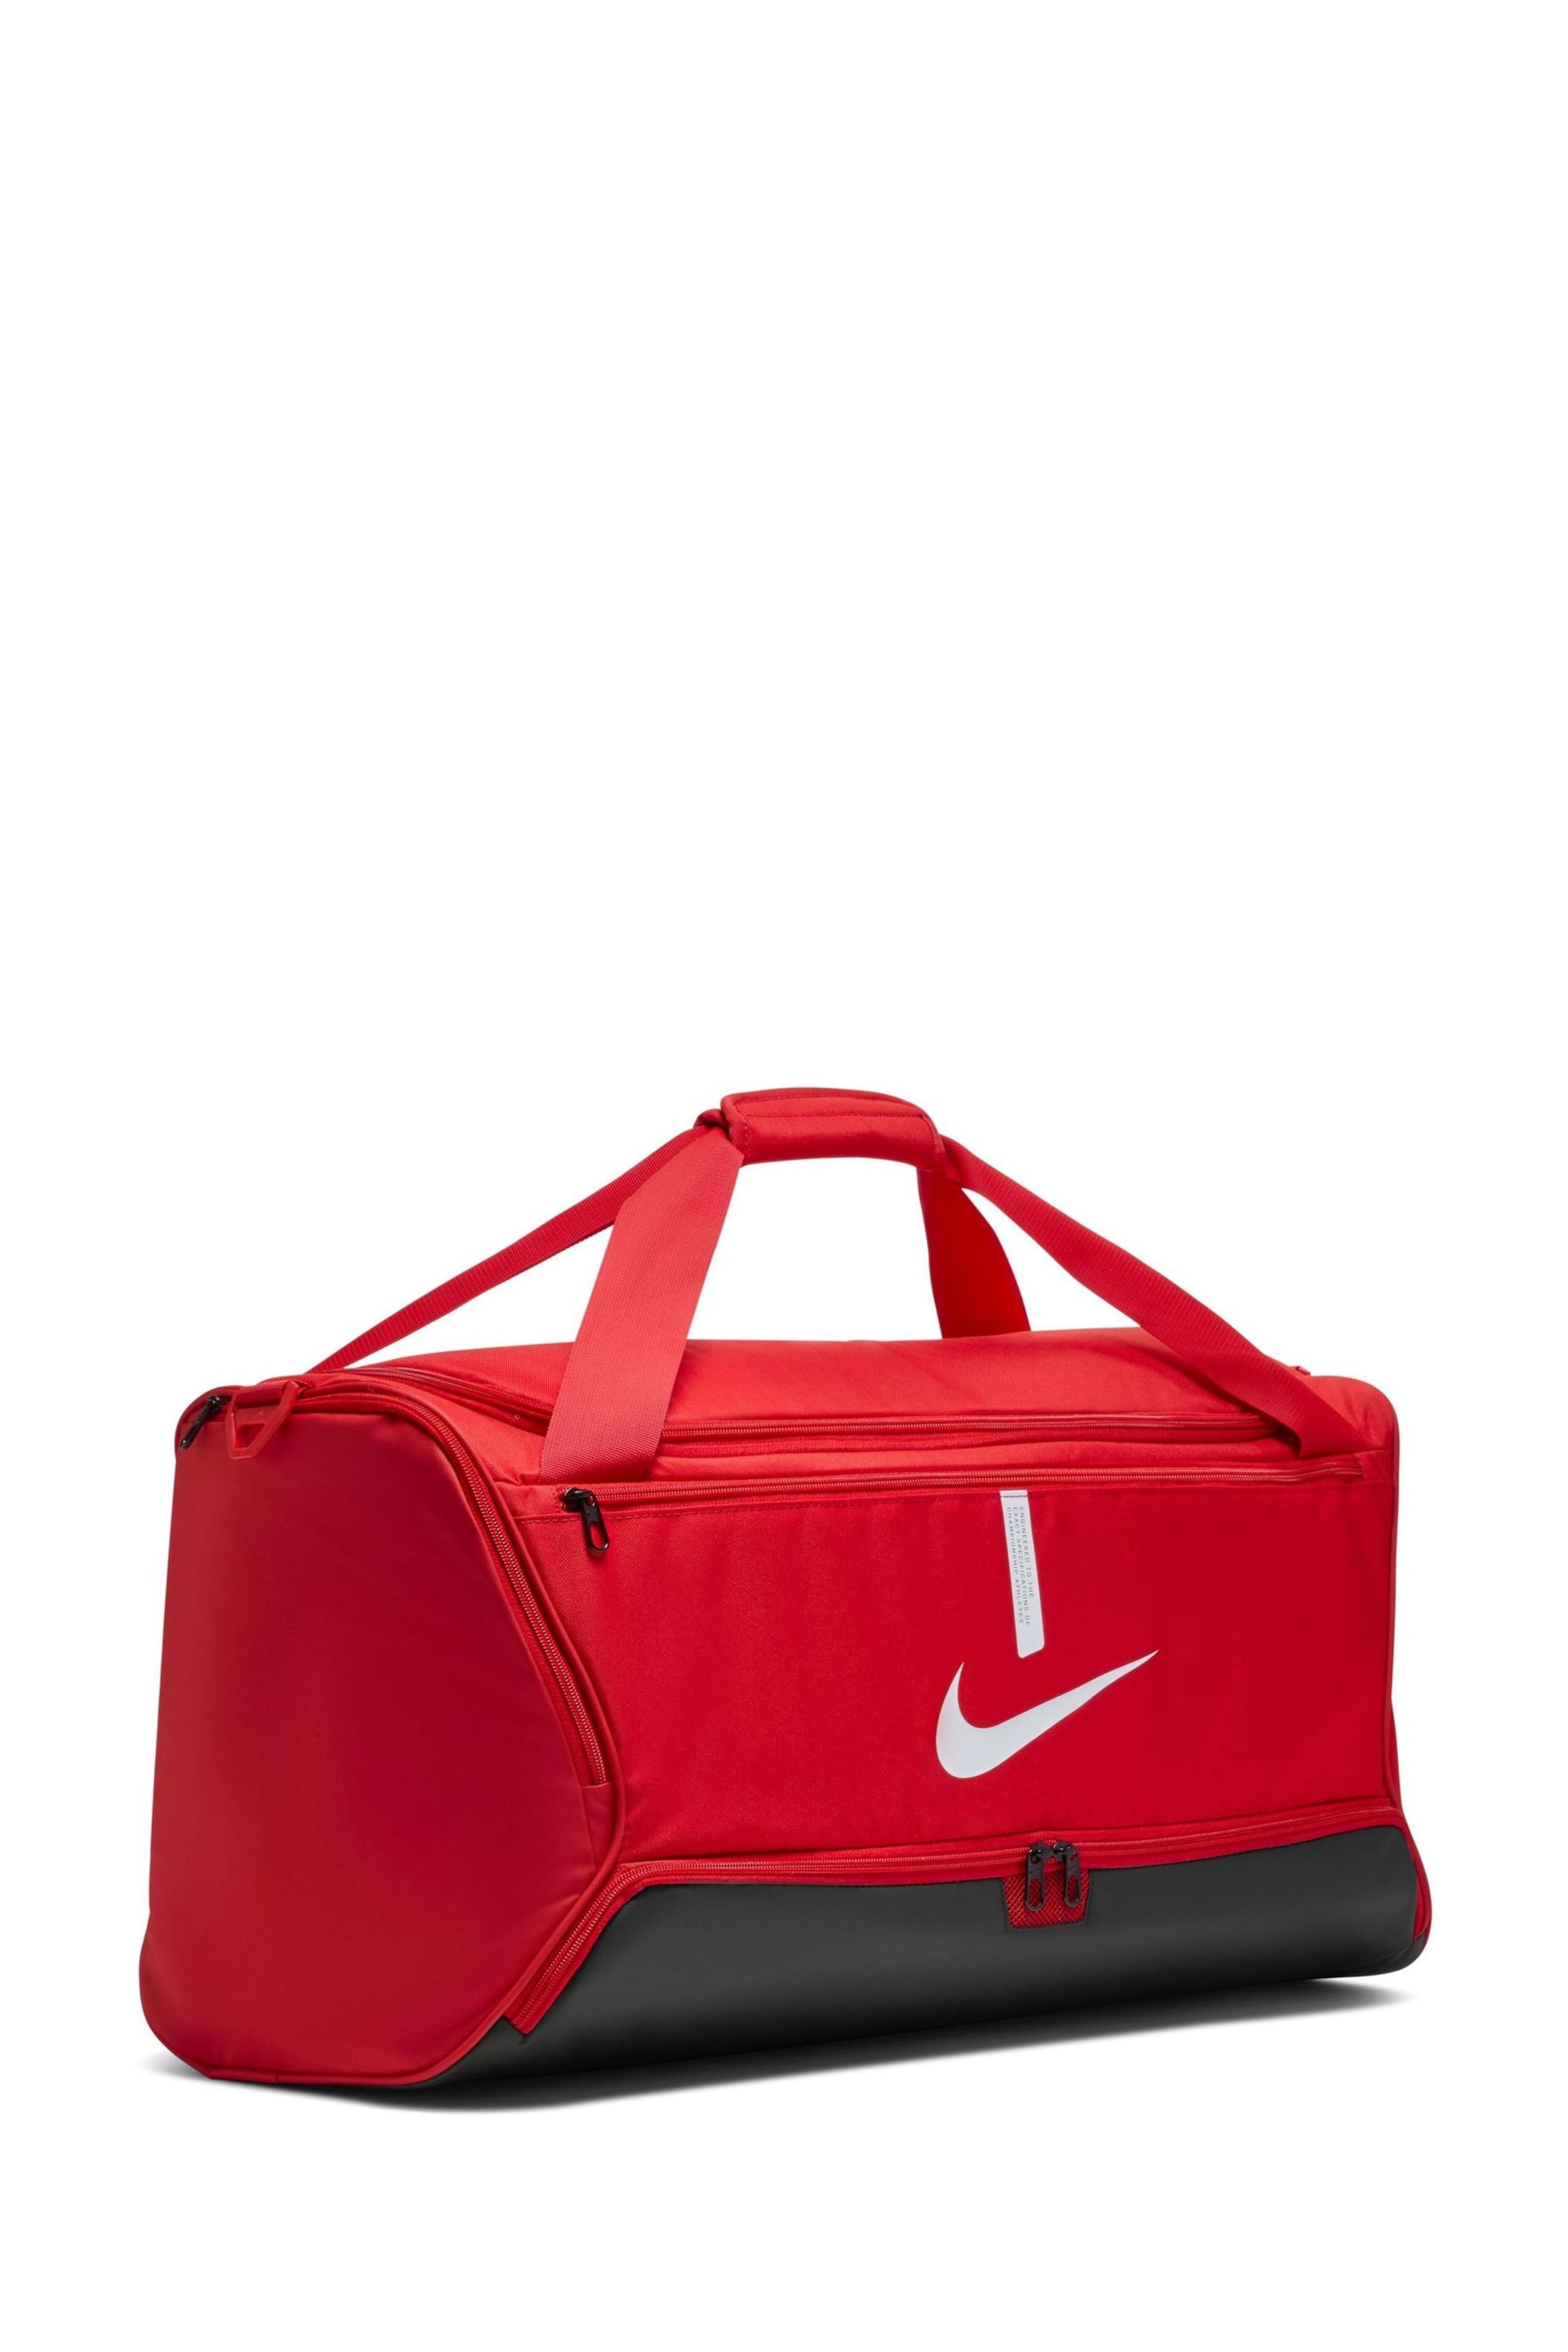 Nike Red Medium Academy Team Football Duffel Bag 60L - Image 6 of 11